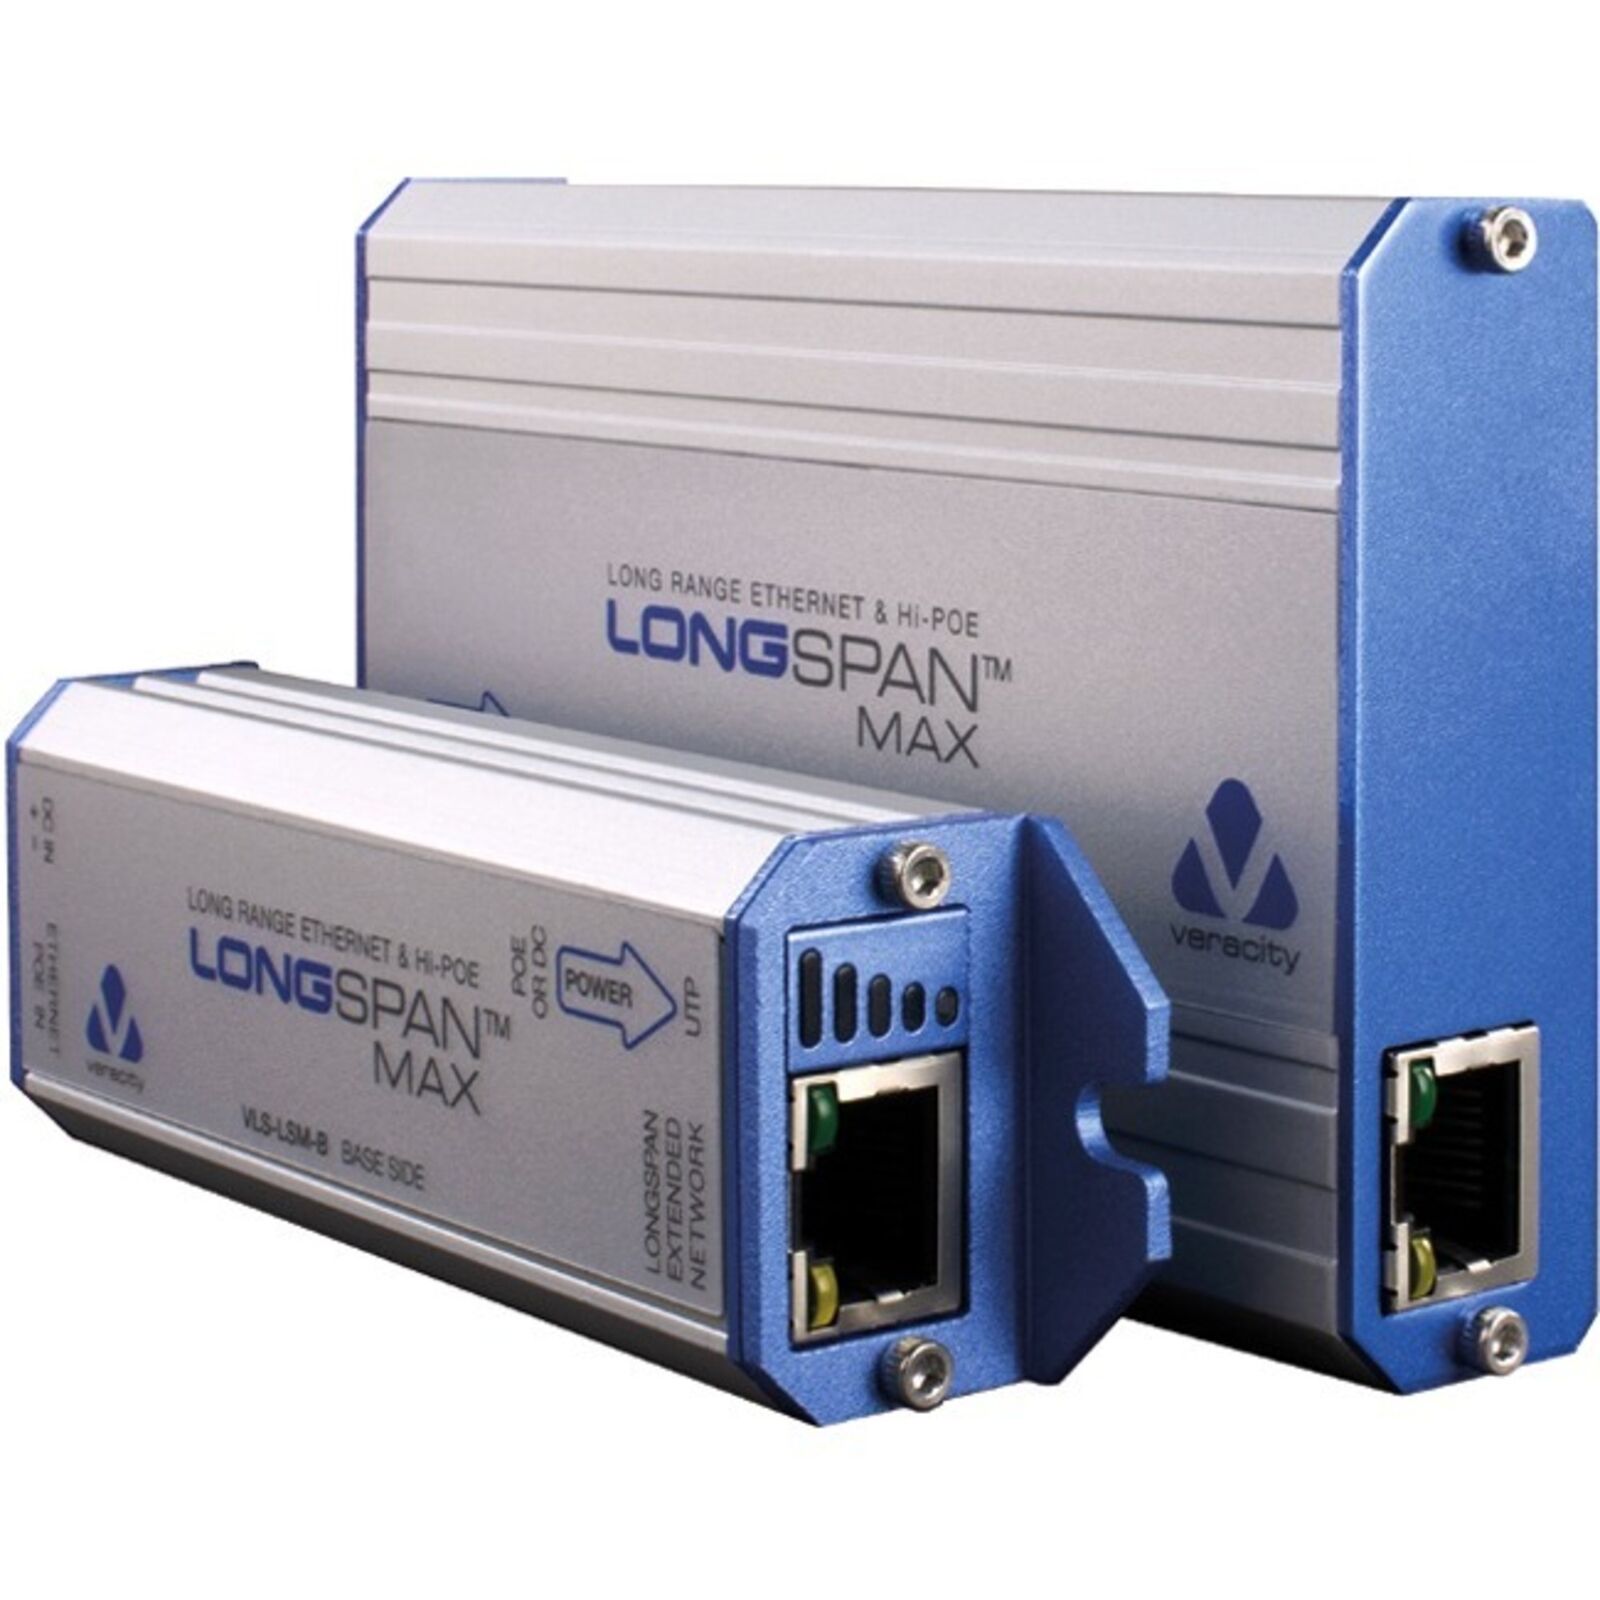 Veracity - VLS-LSM-C - Veracity LONGSPAN Max (Camera). Hi-Power, 90W long-range